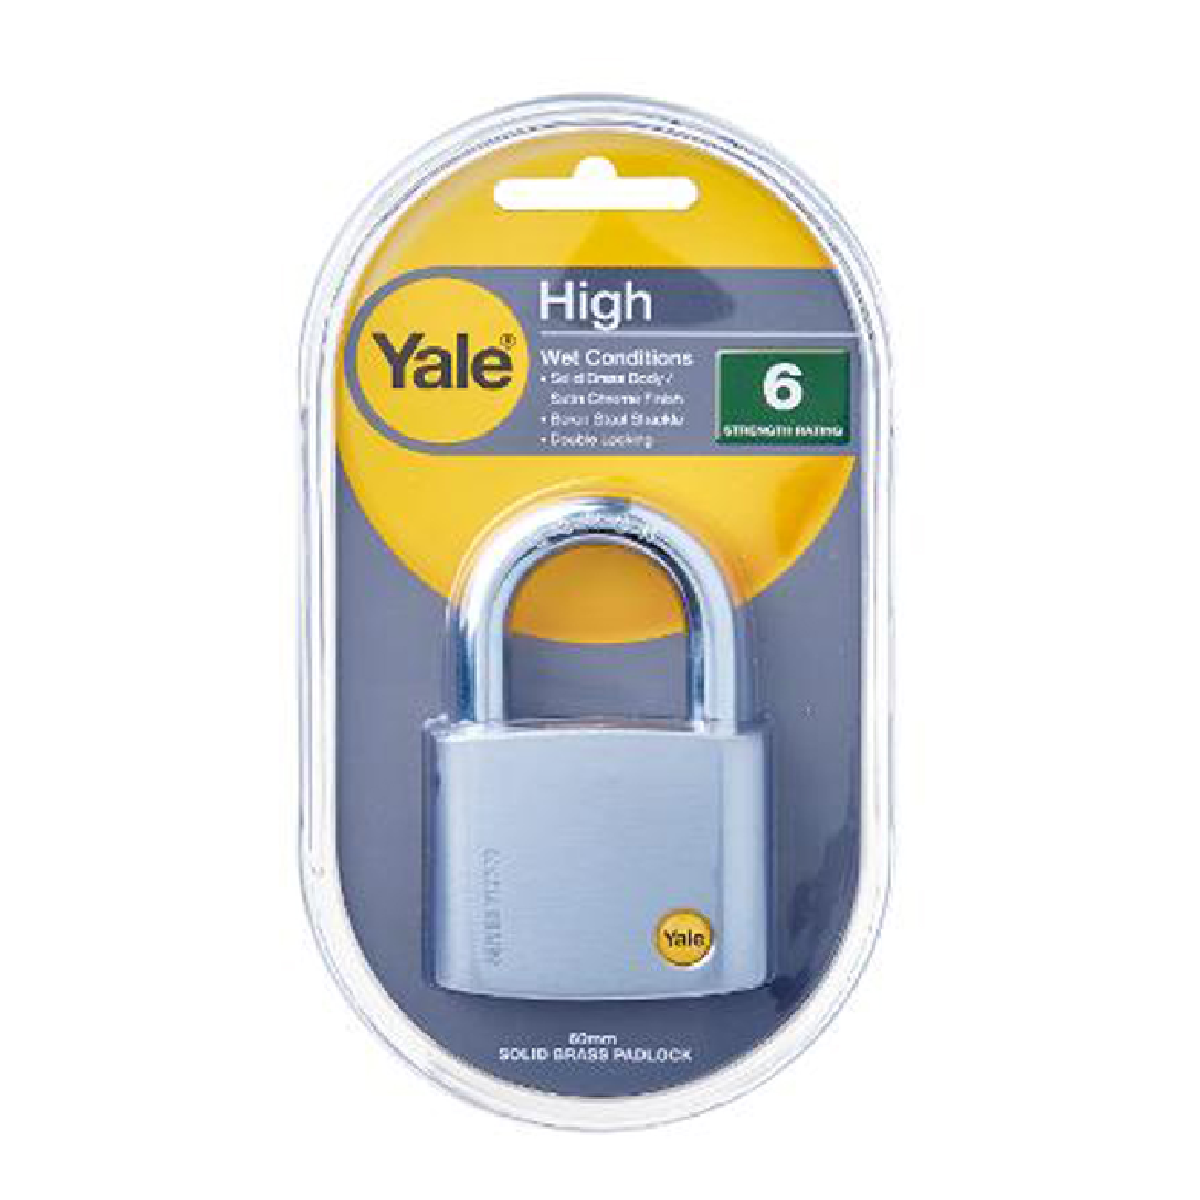 Yale Y120/60/127/1, 60MM Boron Shackle Security Padlock